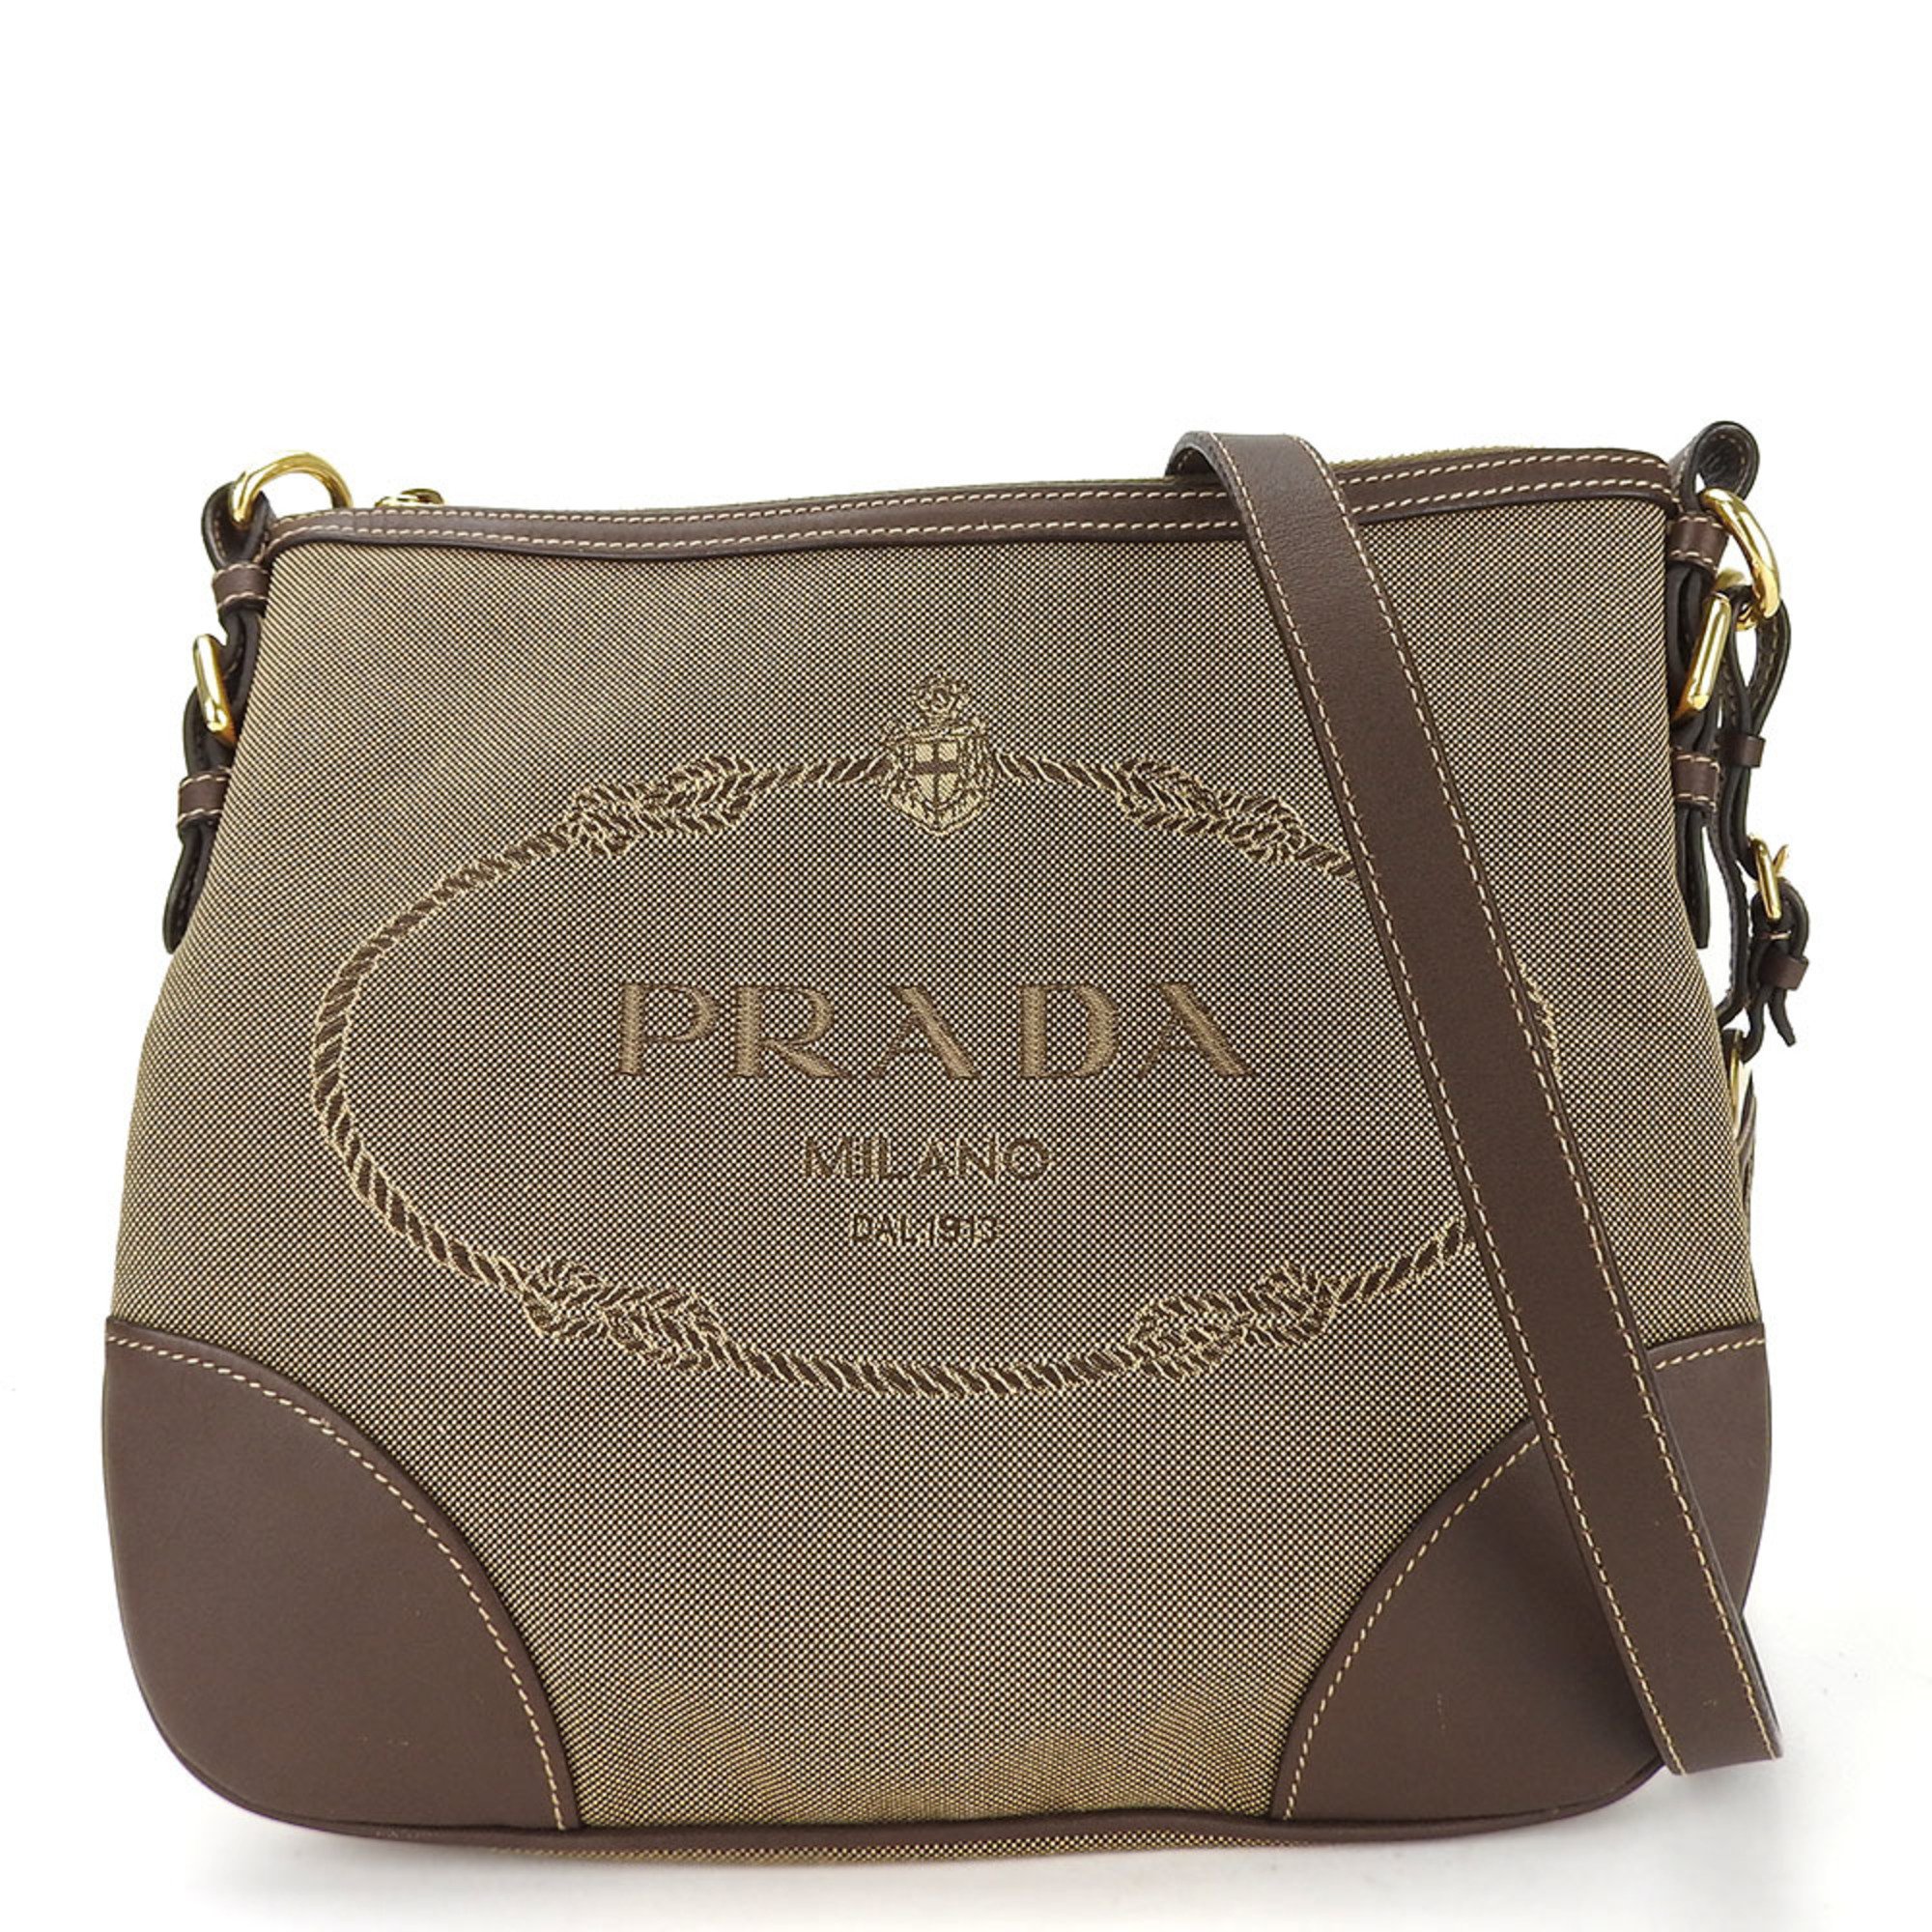 Prada Shoulder Bag Canvas Leather Beige Brown Women's PRADA